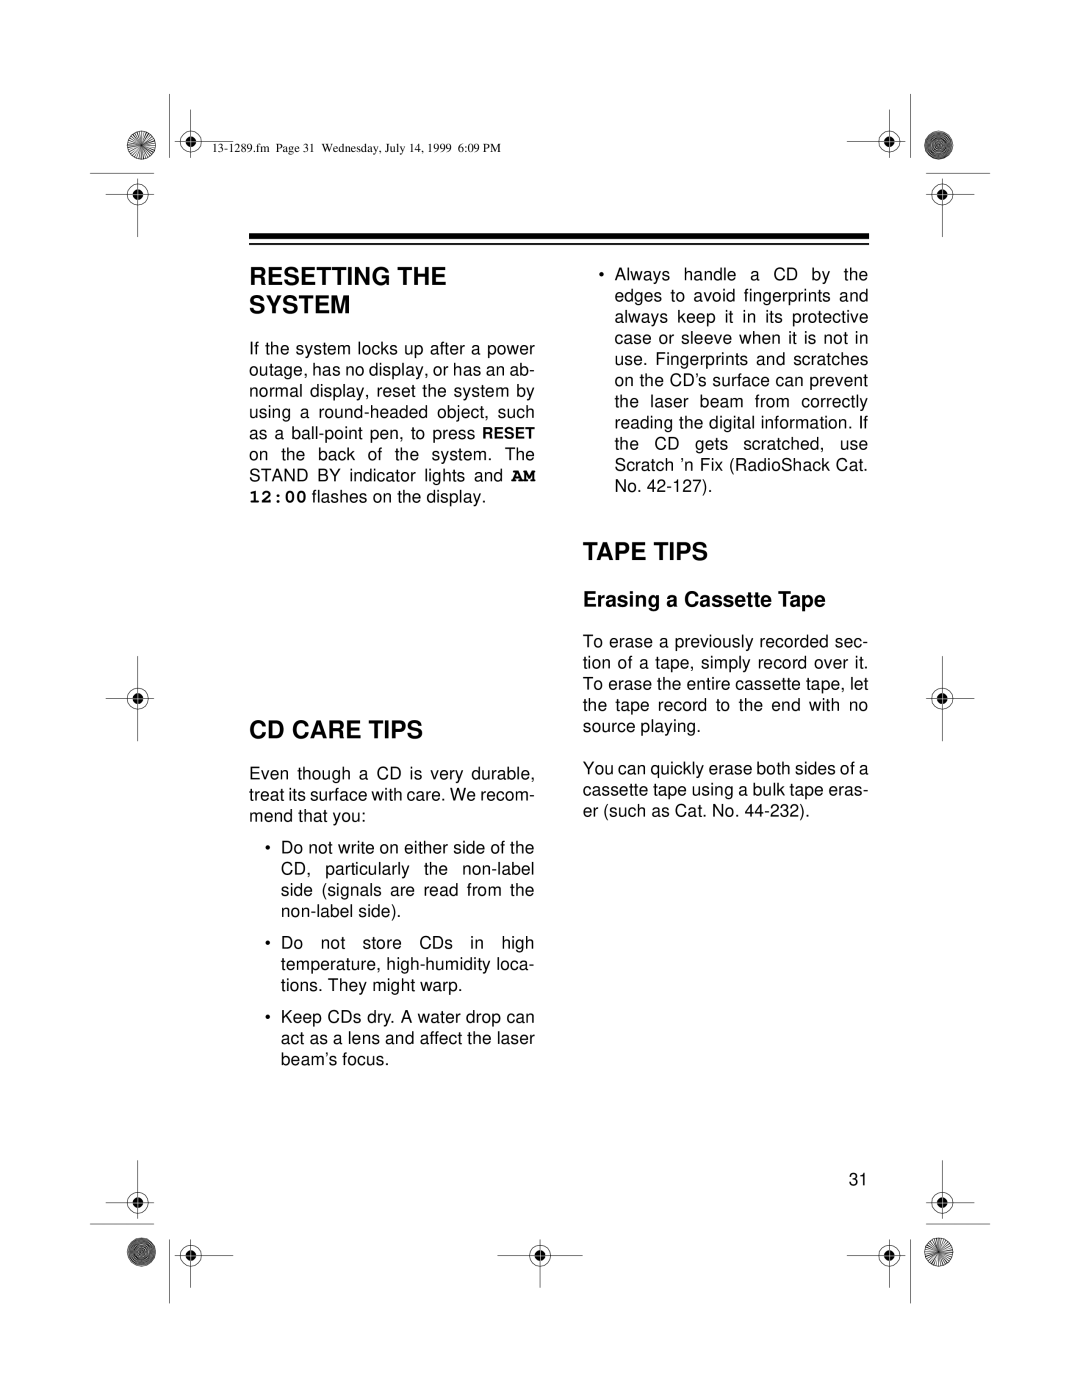 Optimus 742 owner manual Resetting The System, Cd Care Tips, Tape Tips, Erasing a Cassette Tape 